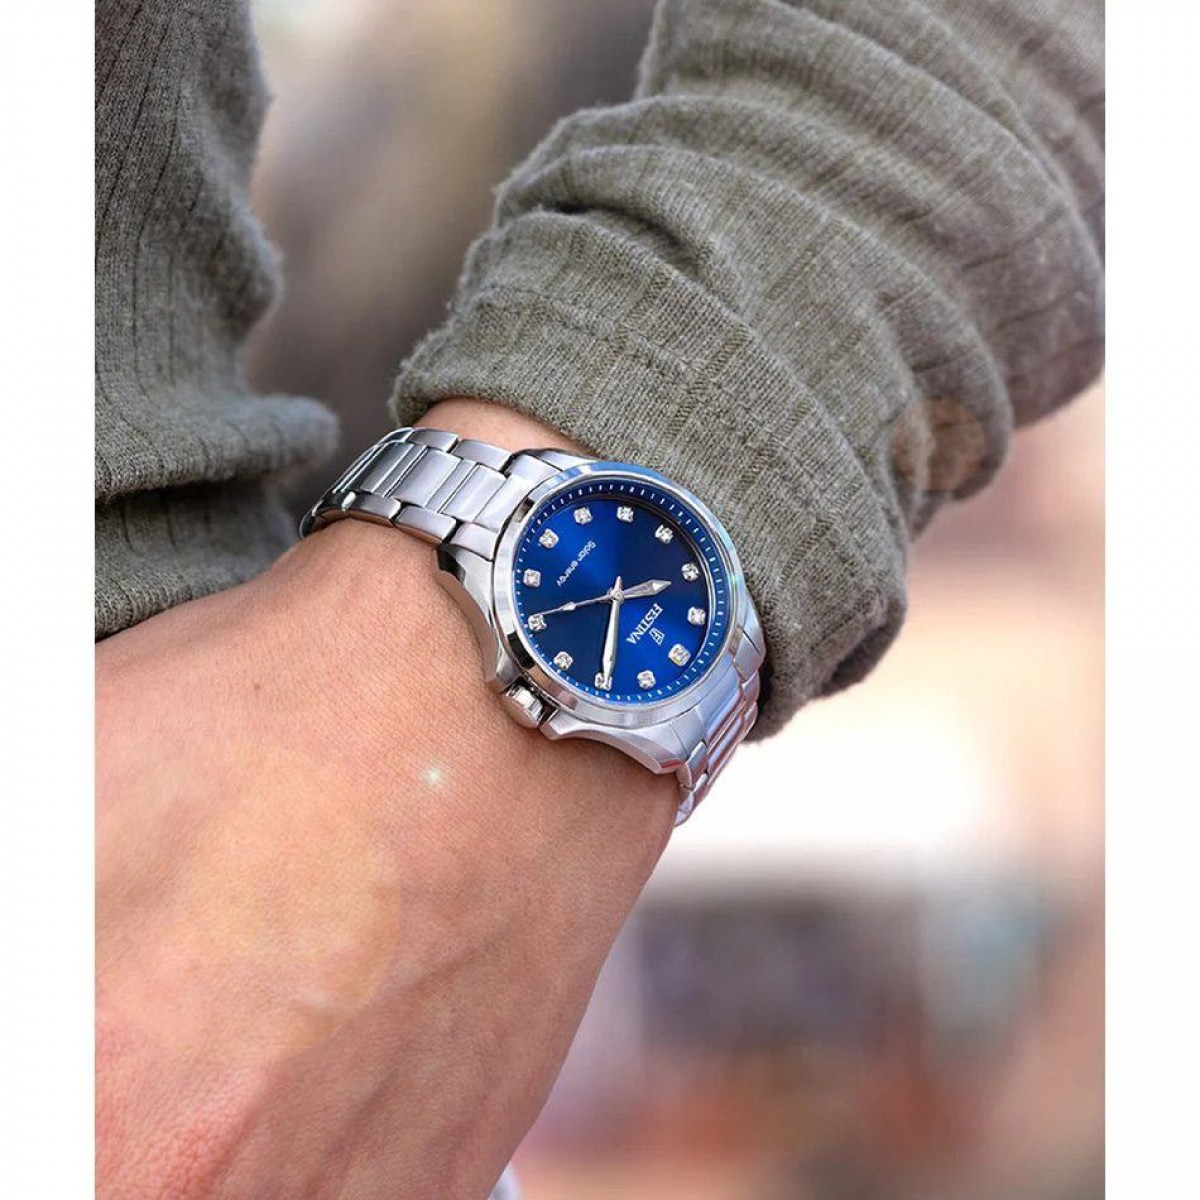 Комплект часовници за двойки Festina F20656/2 & F20654/4